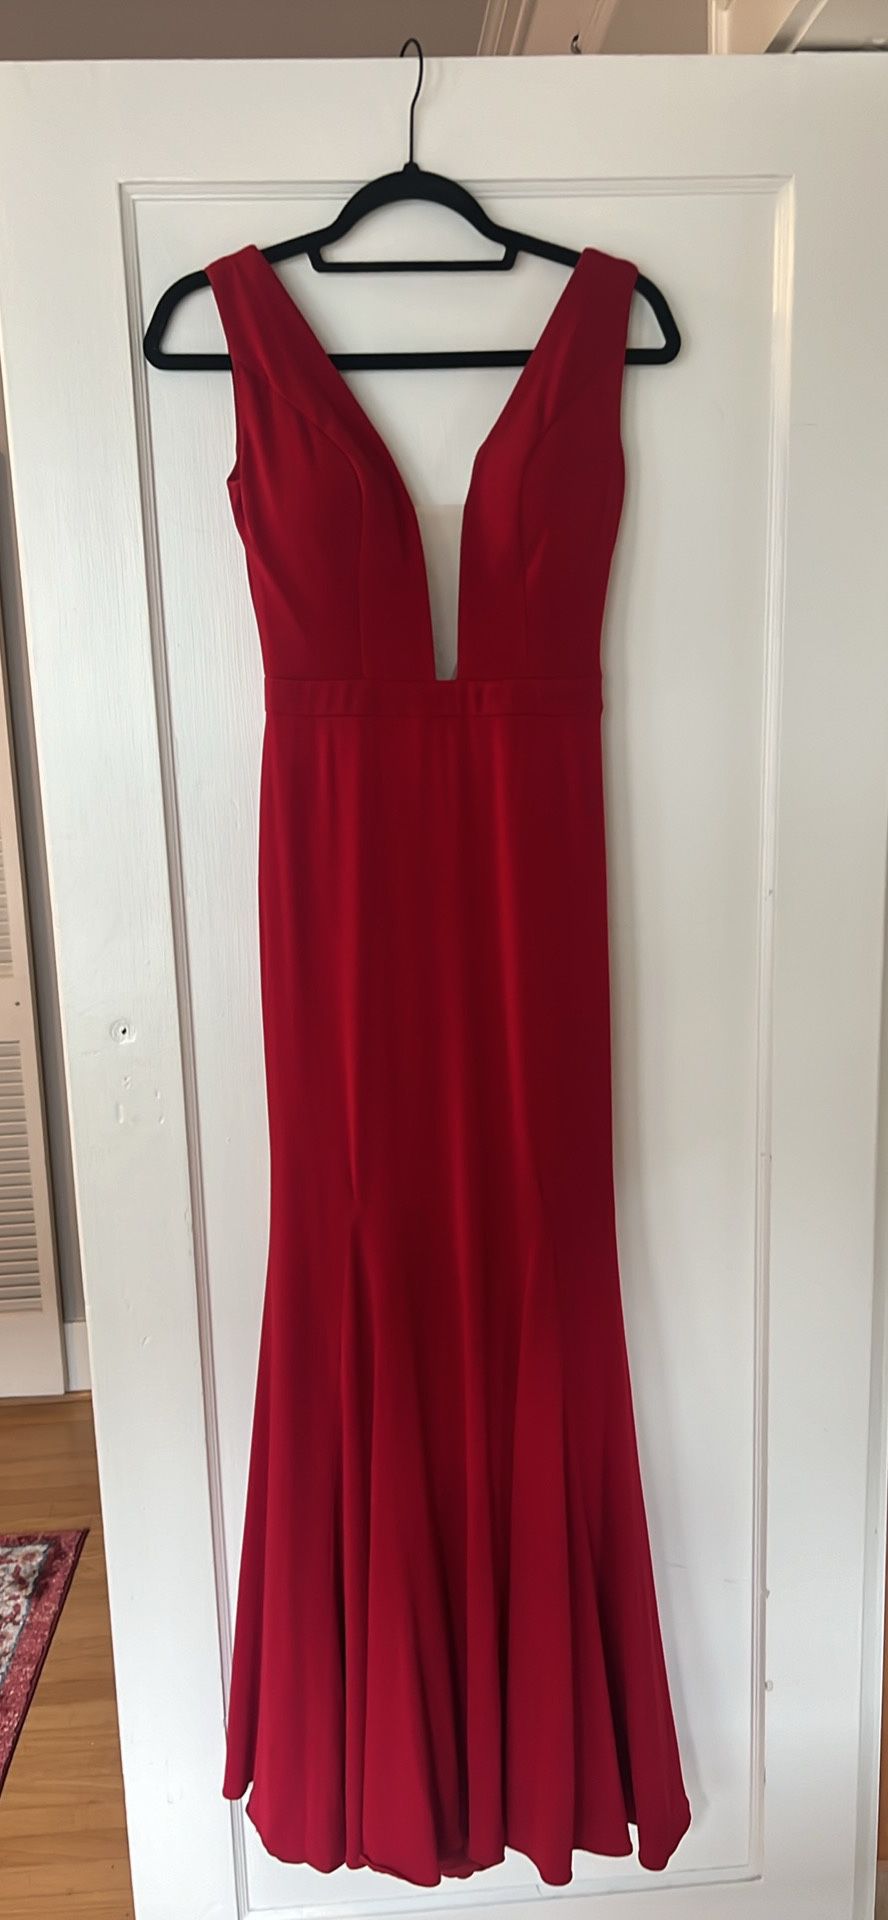 Red prom dress 